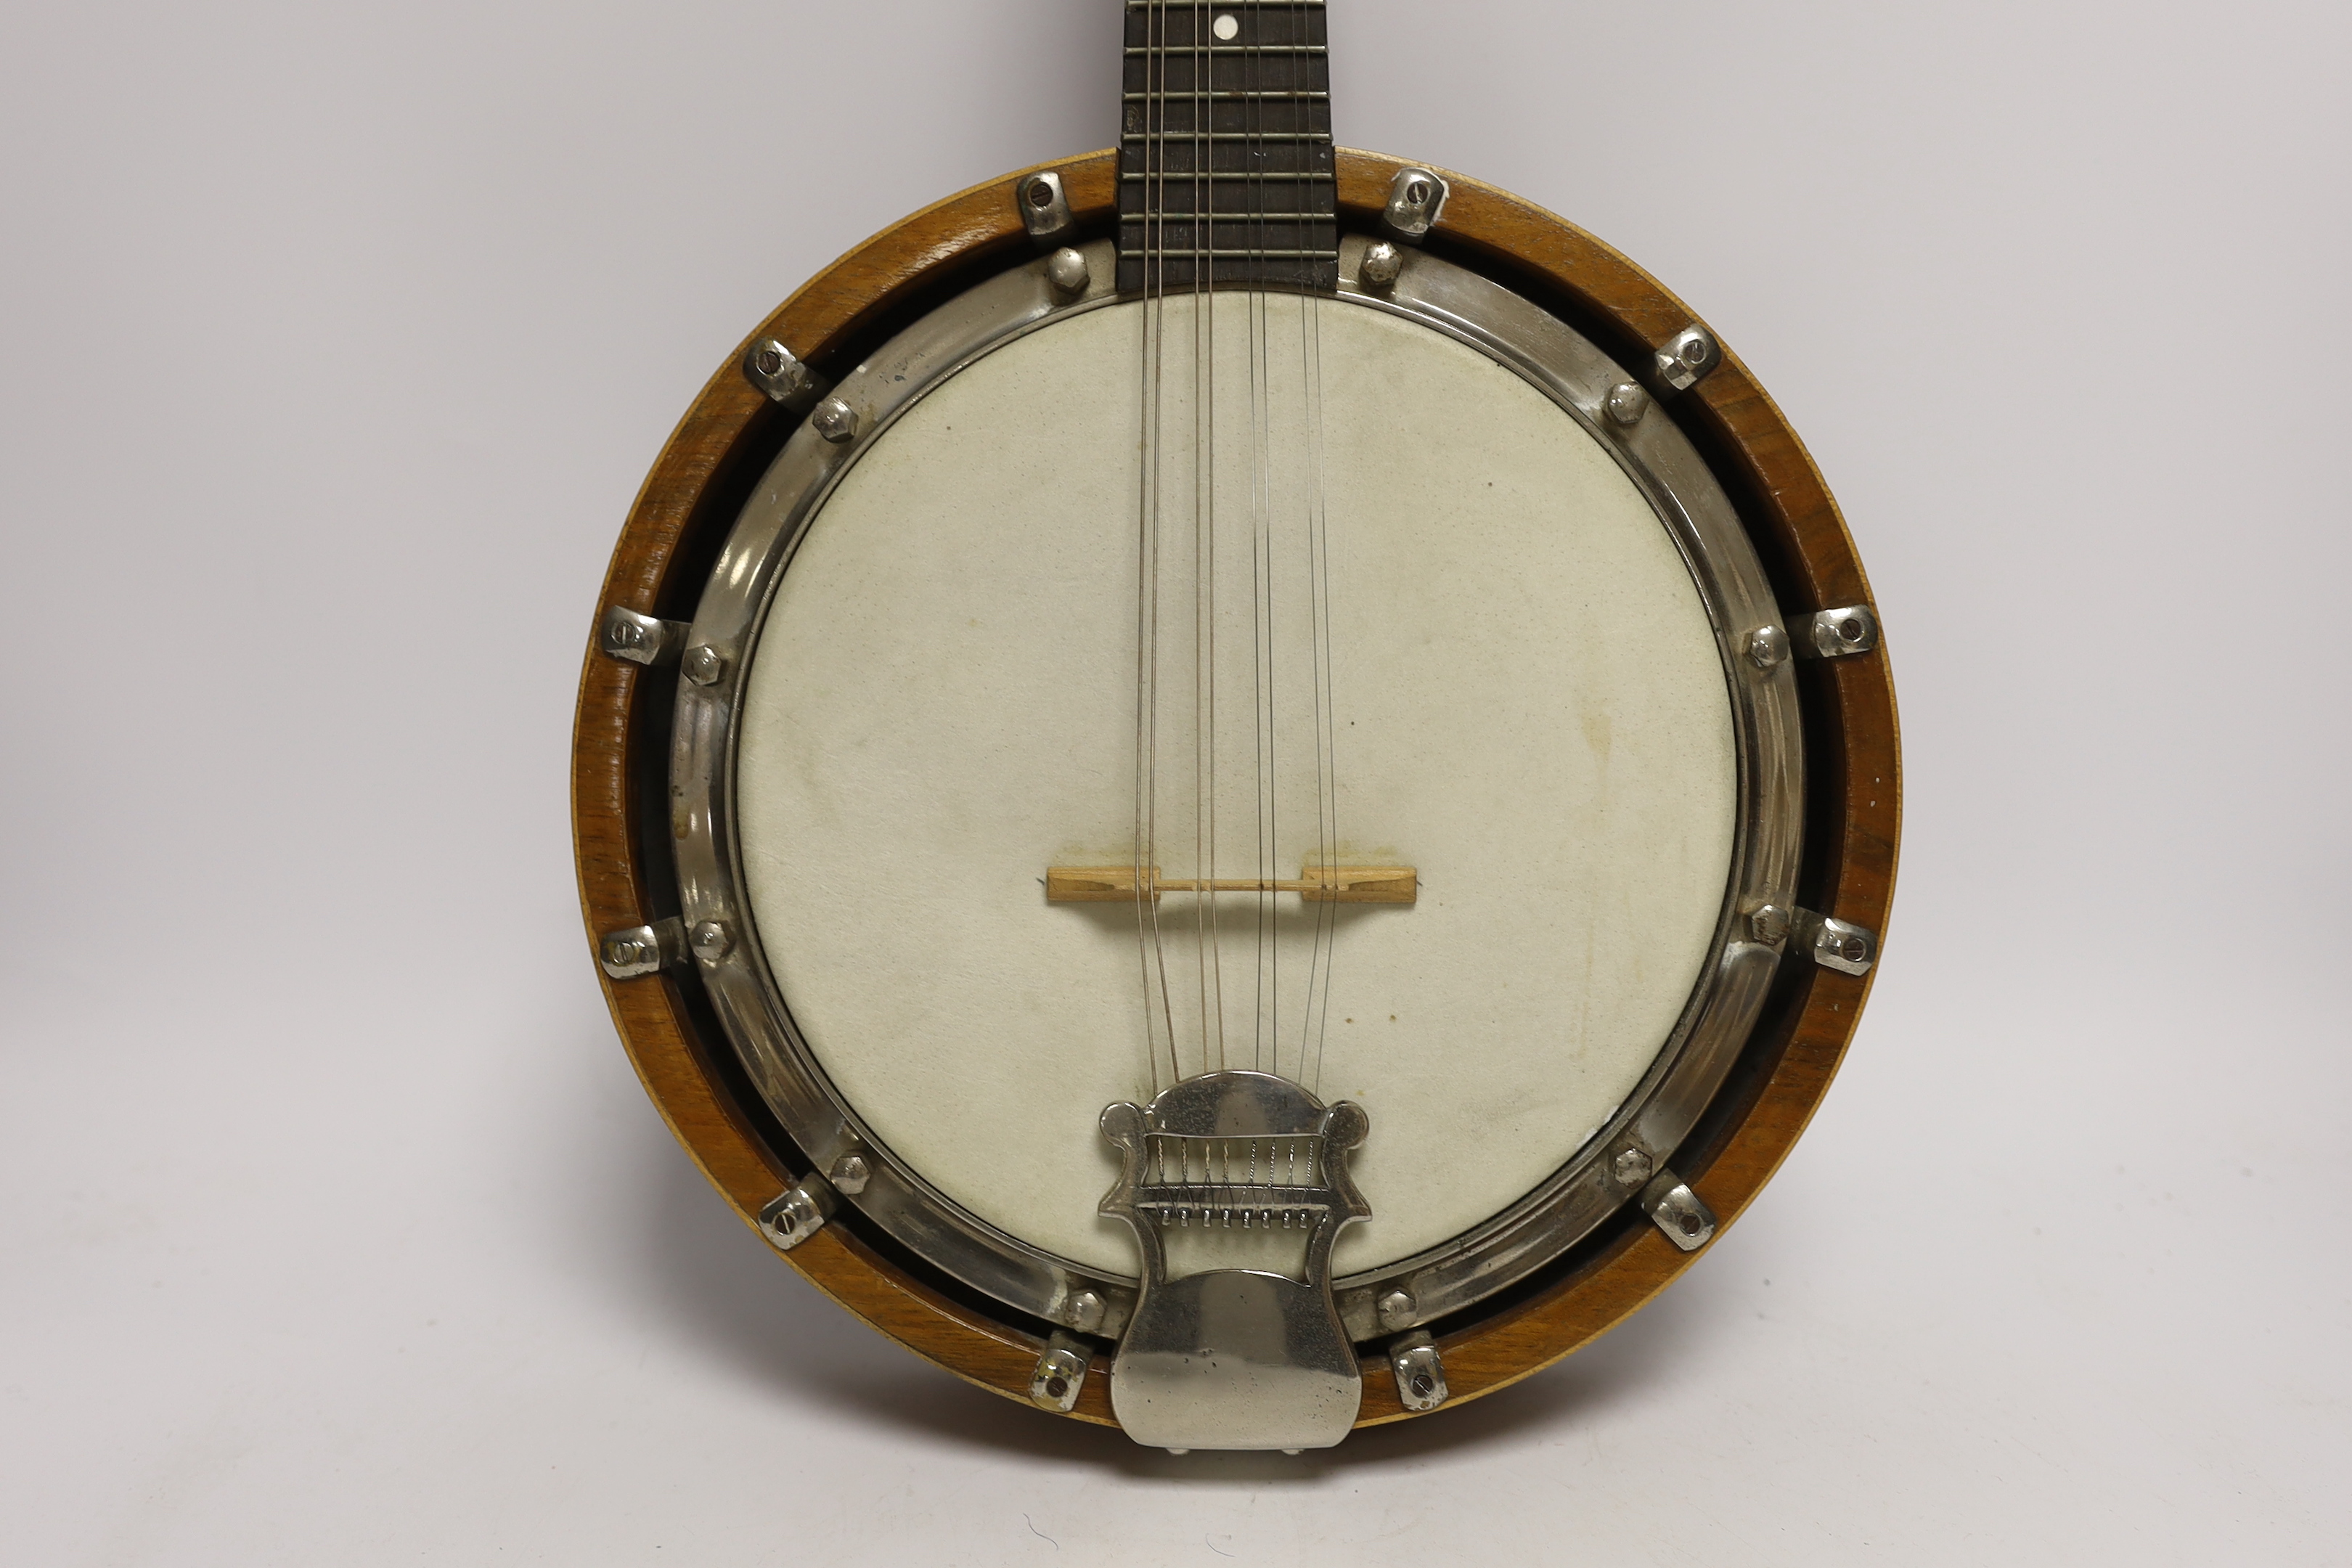 A banjo ukelele, Windsor model 4, 60cm long in a hard case